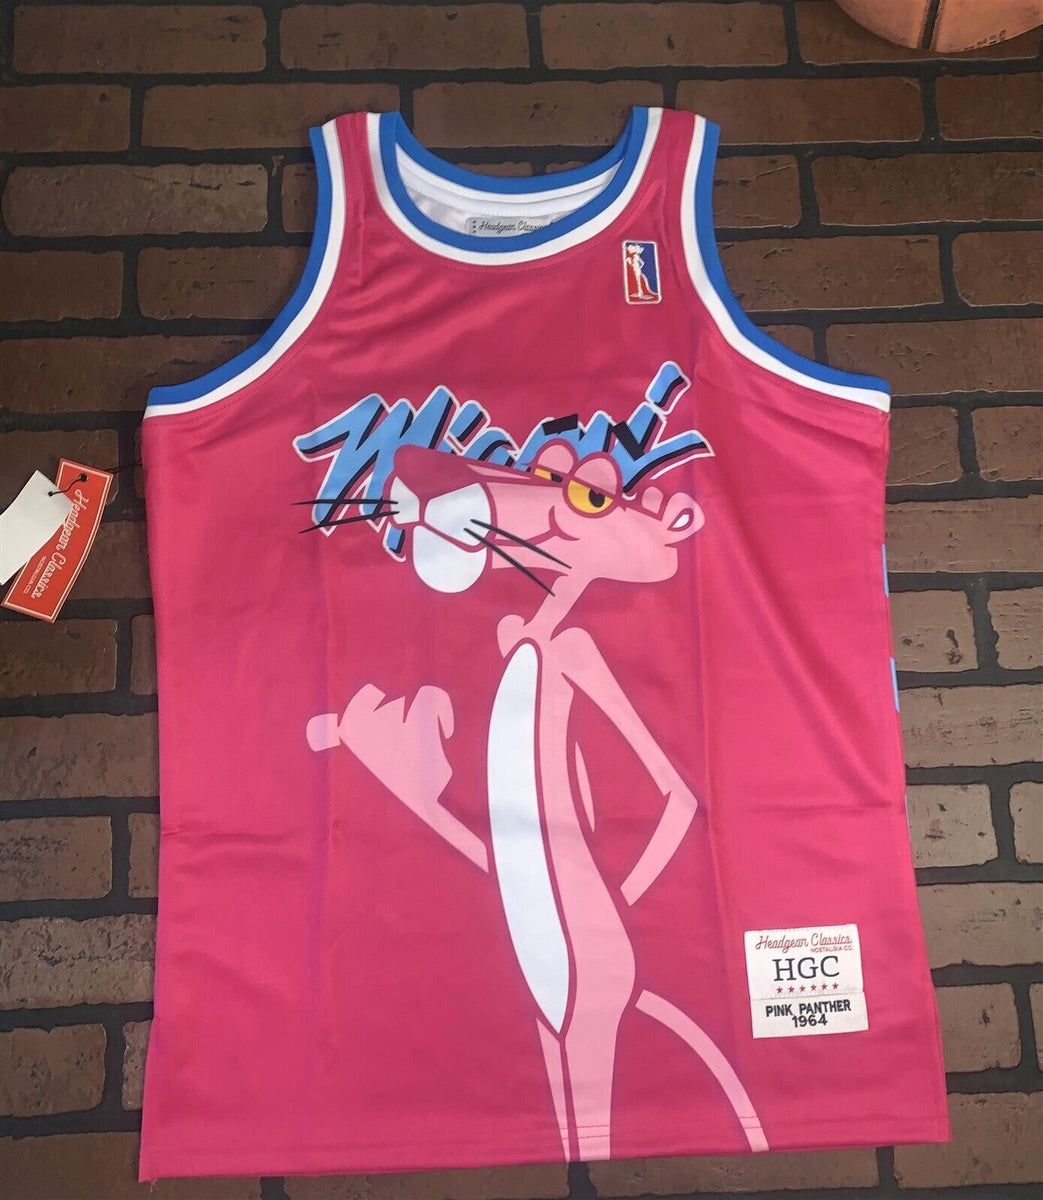 Steal Deals Pink Panther / Miami Headgear Classics Basketball Jersey ~never Worn~ L L